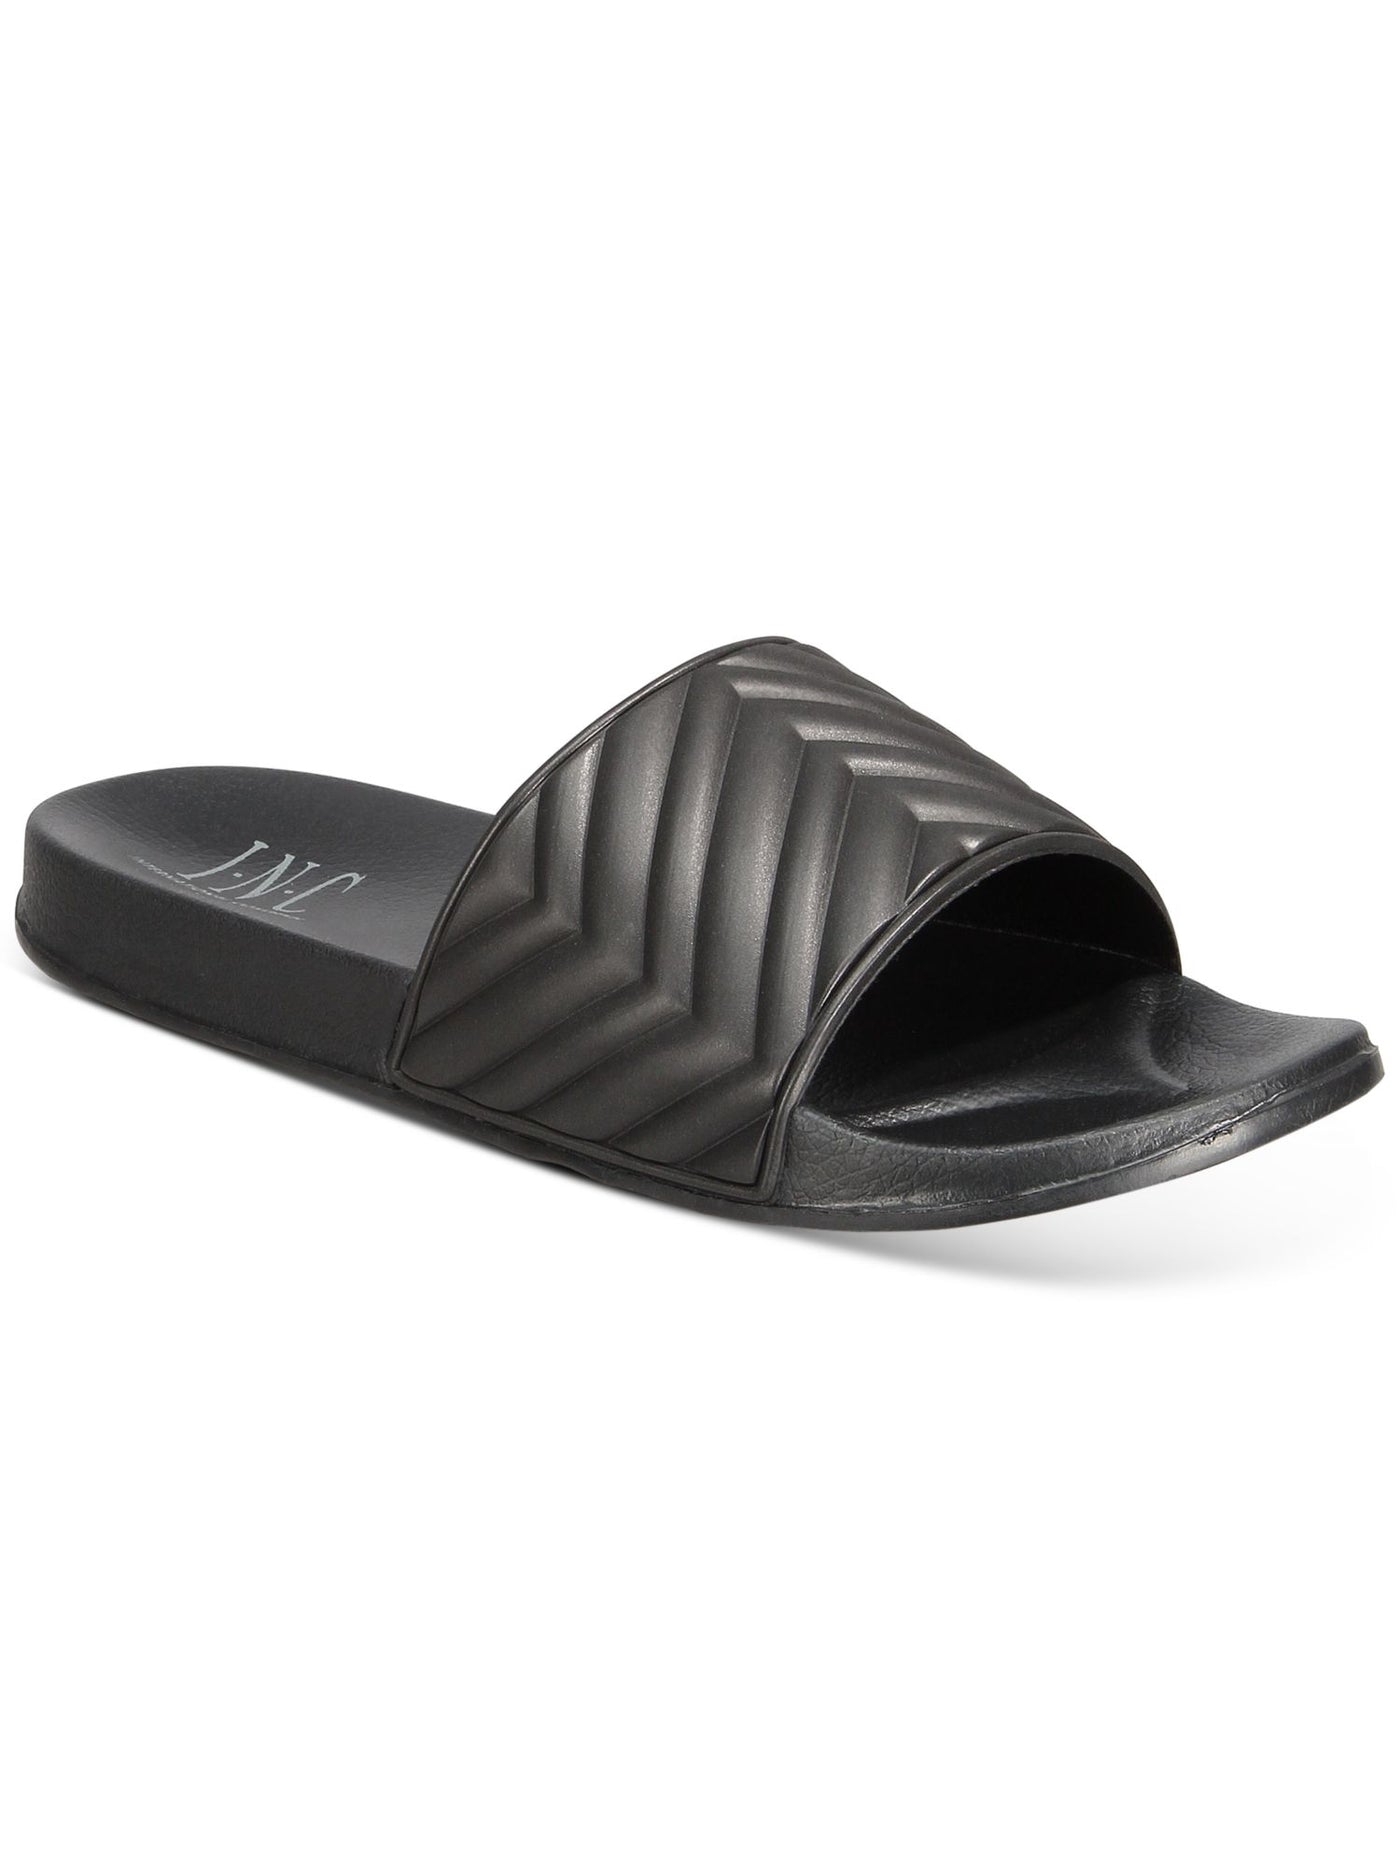 INC Mens Black Quilted Xander Open Toe Slip On Slide Sandals Shoes 10 M